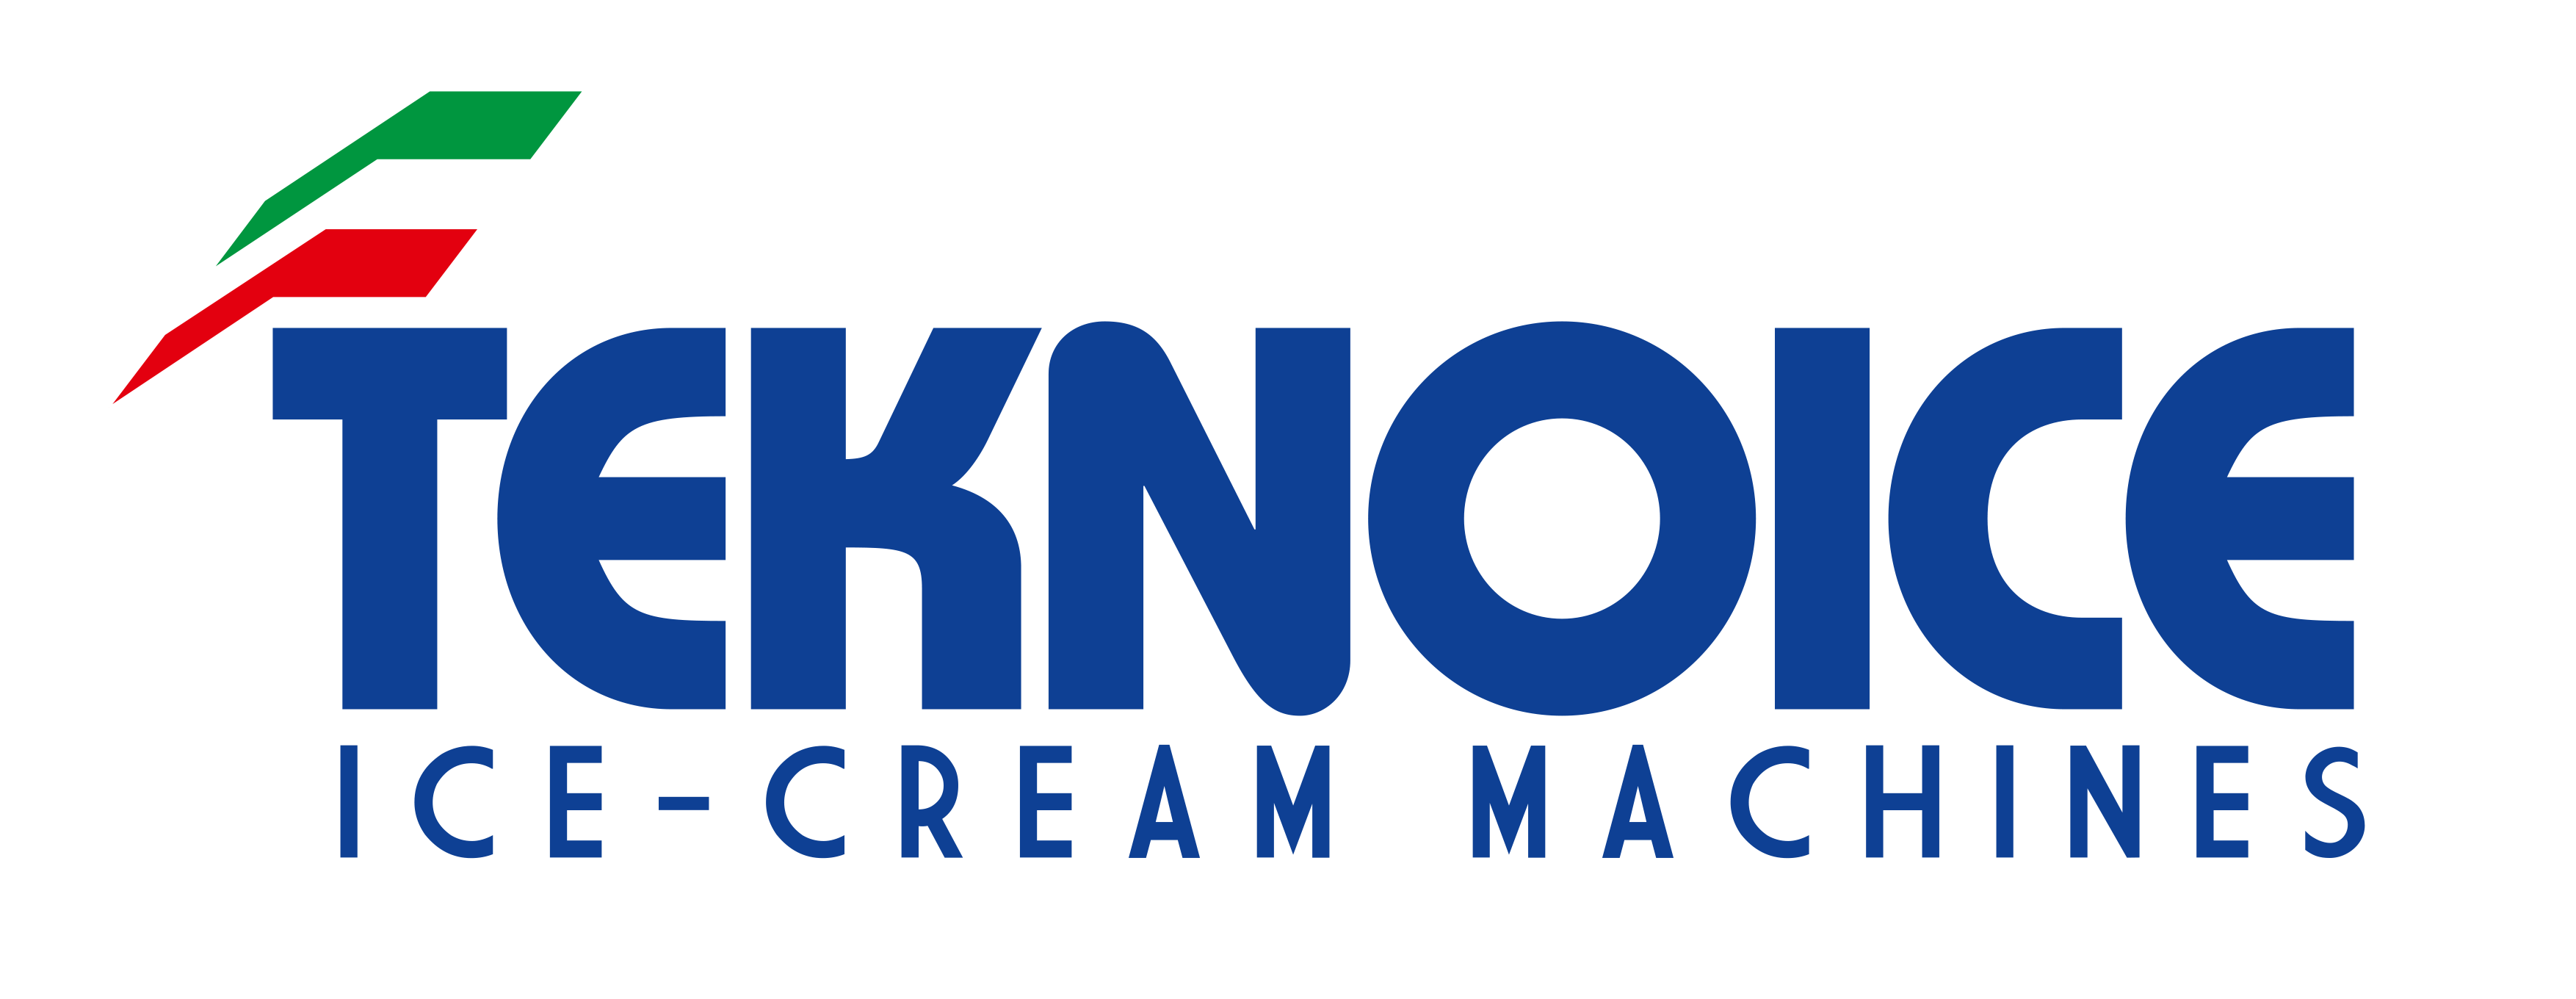 TEKNOICE 冰淇淋生產設備